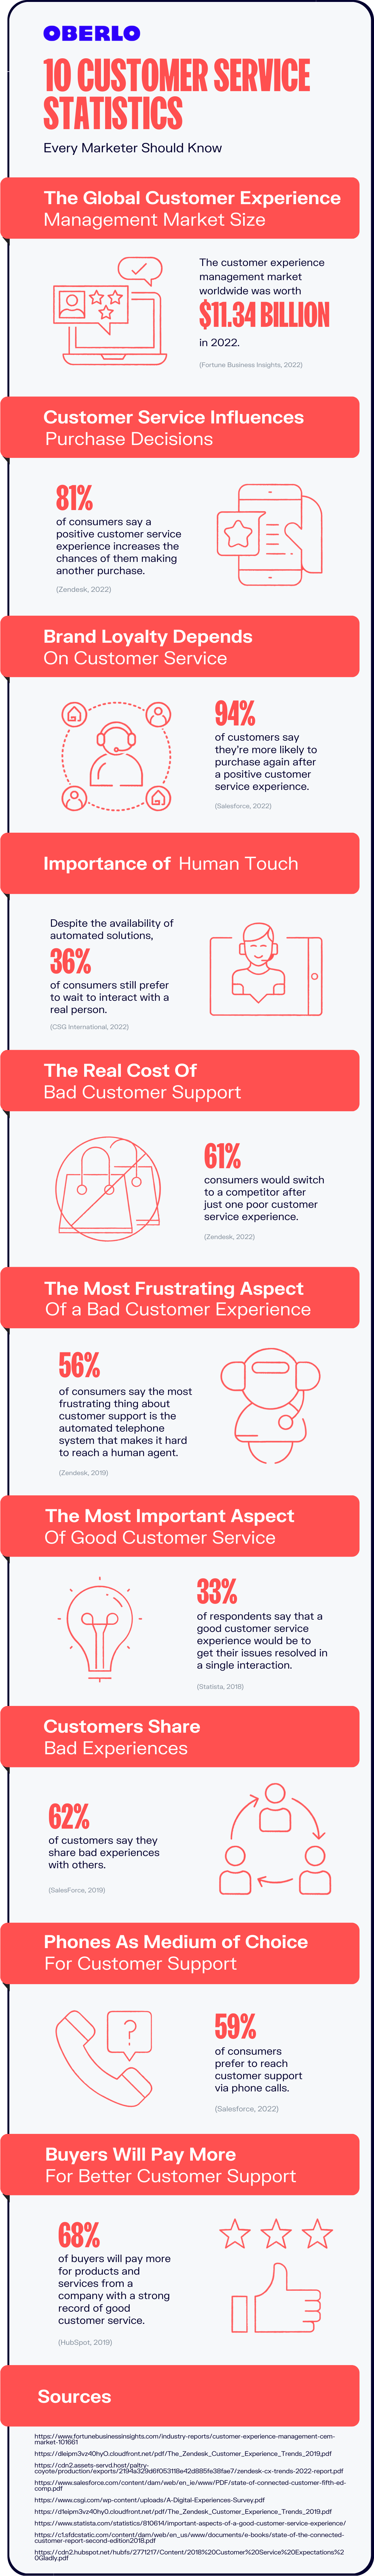 customer service statistics full infographic